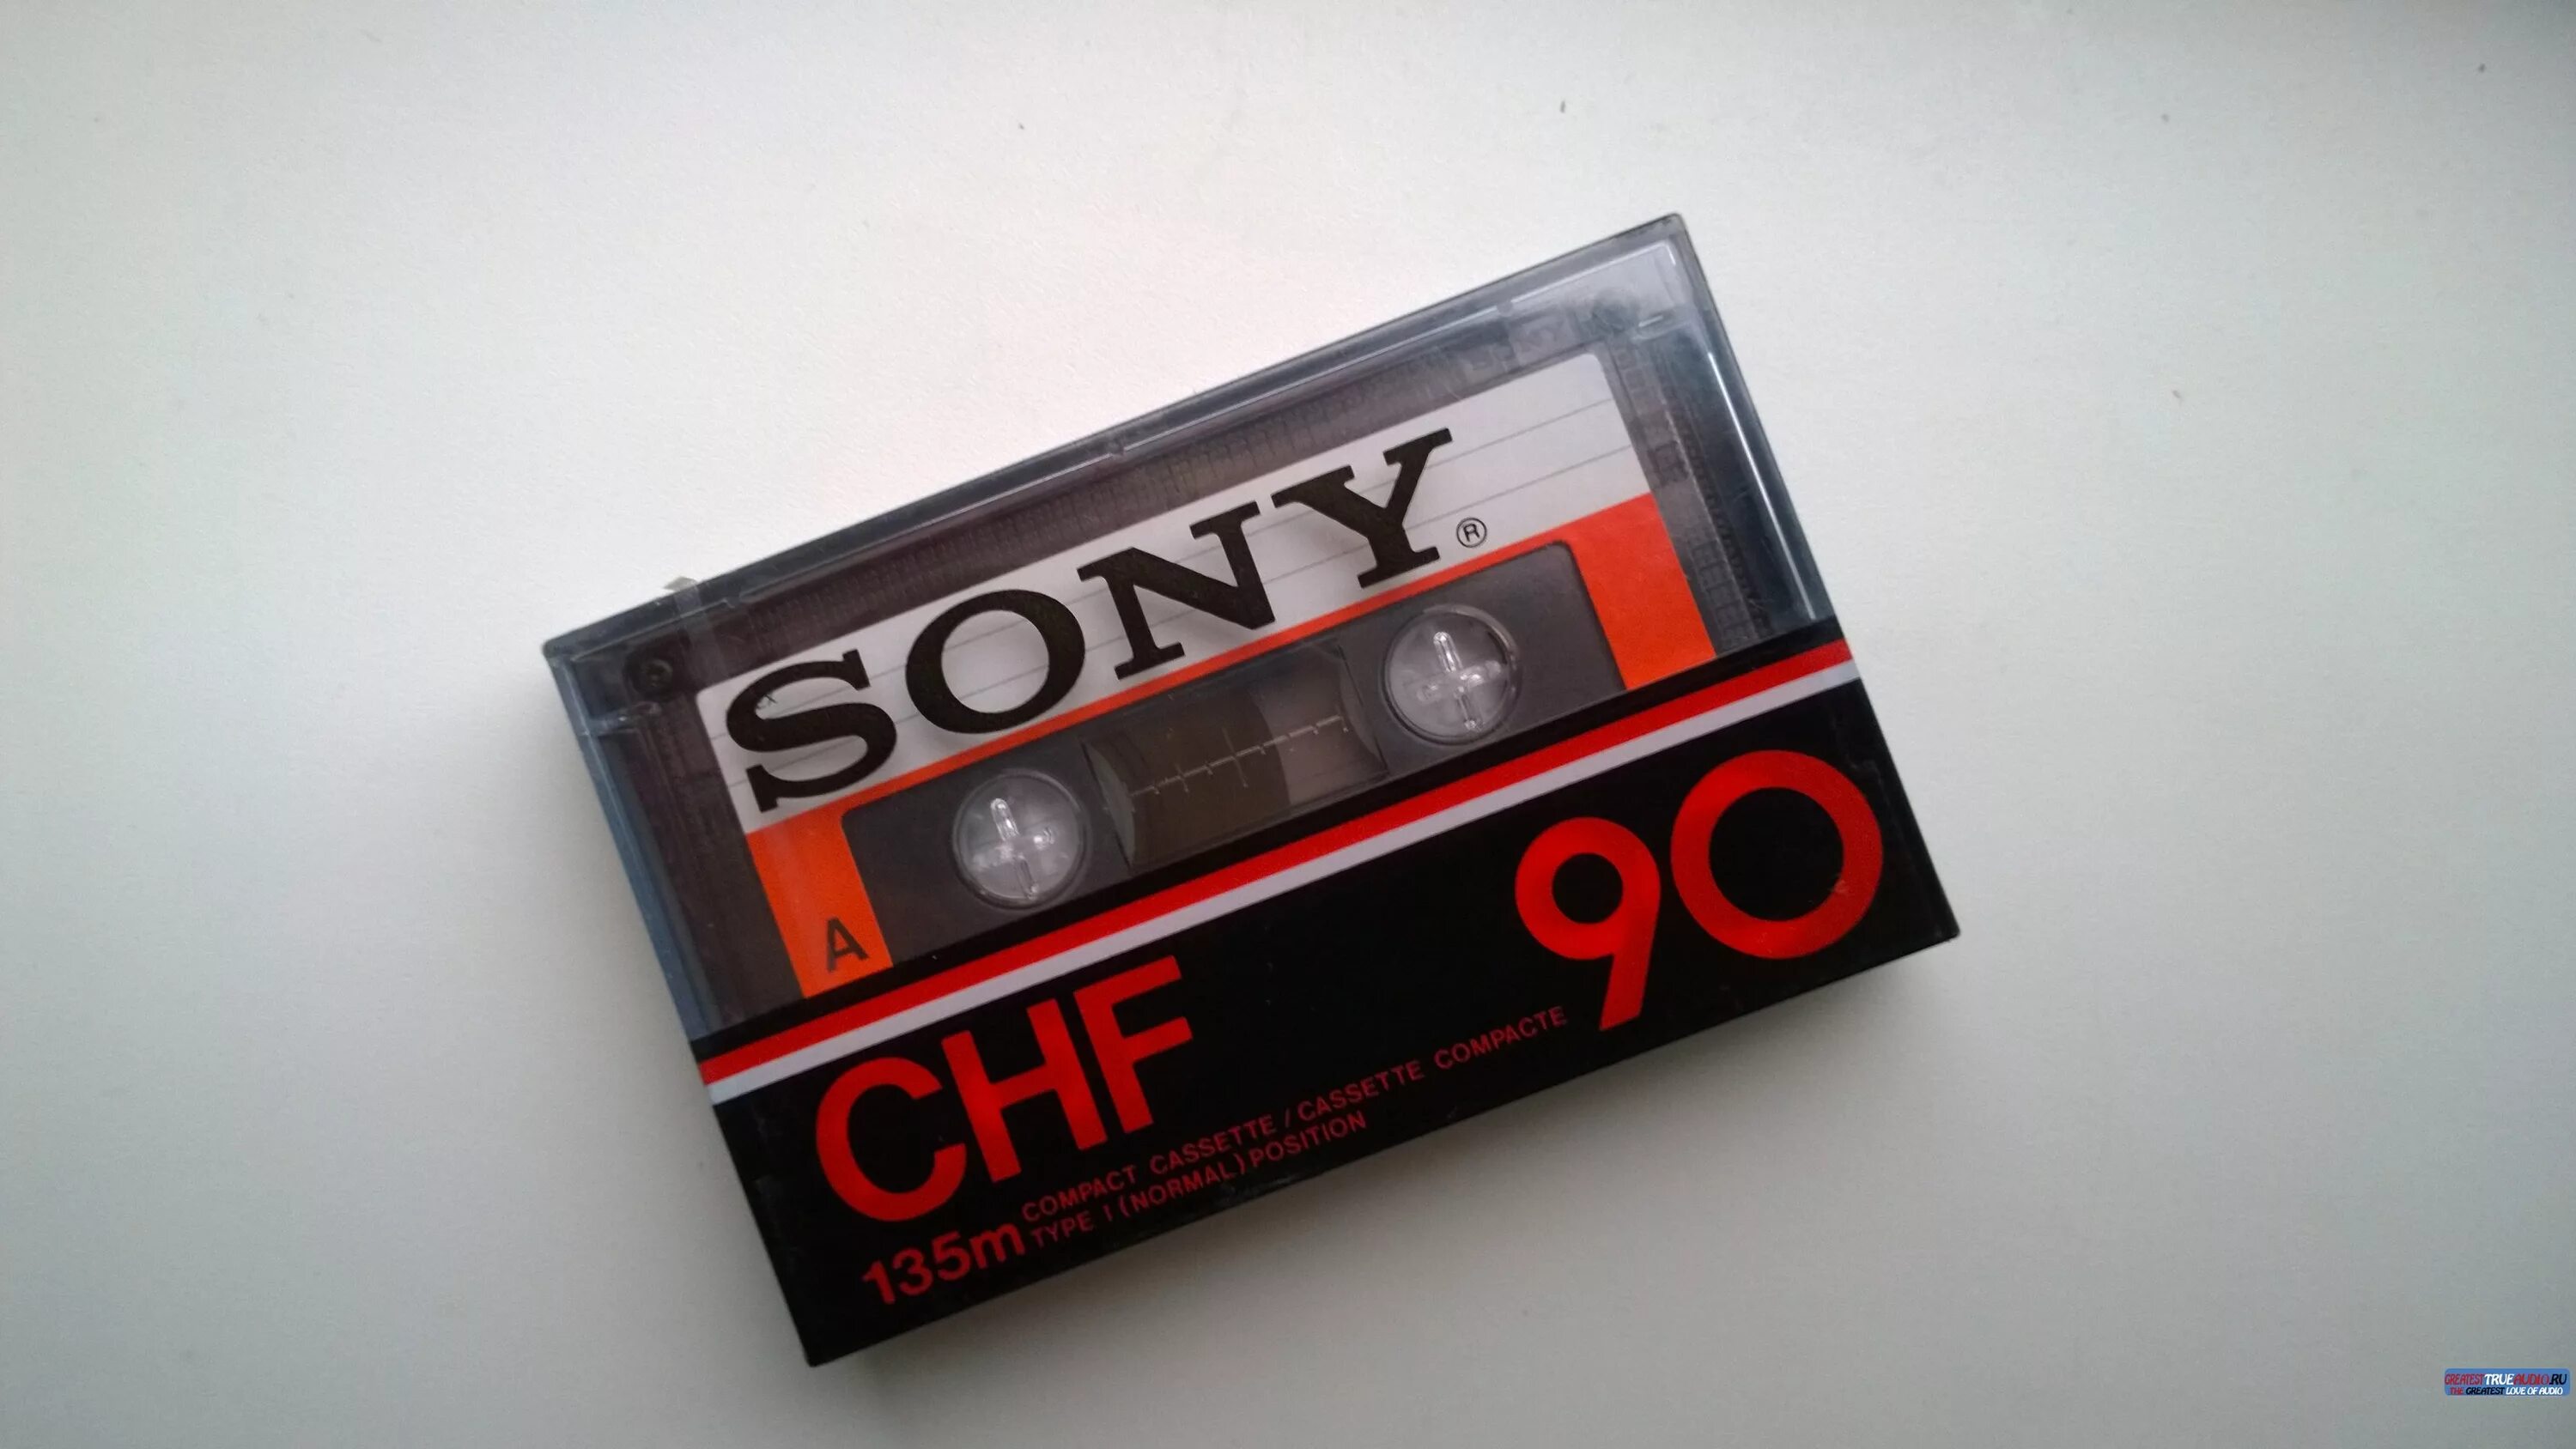 Качество кассет. Sony AHF 90 кассеты. Кассета магнитофонная сони 90. Кассета Sony CHF 90. Аудиокассета Sony AHF 1978.